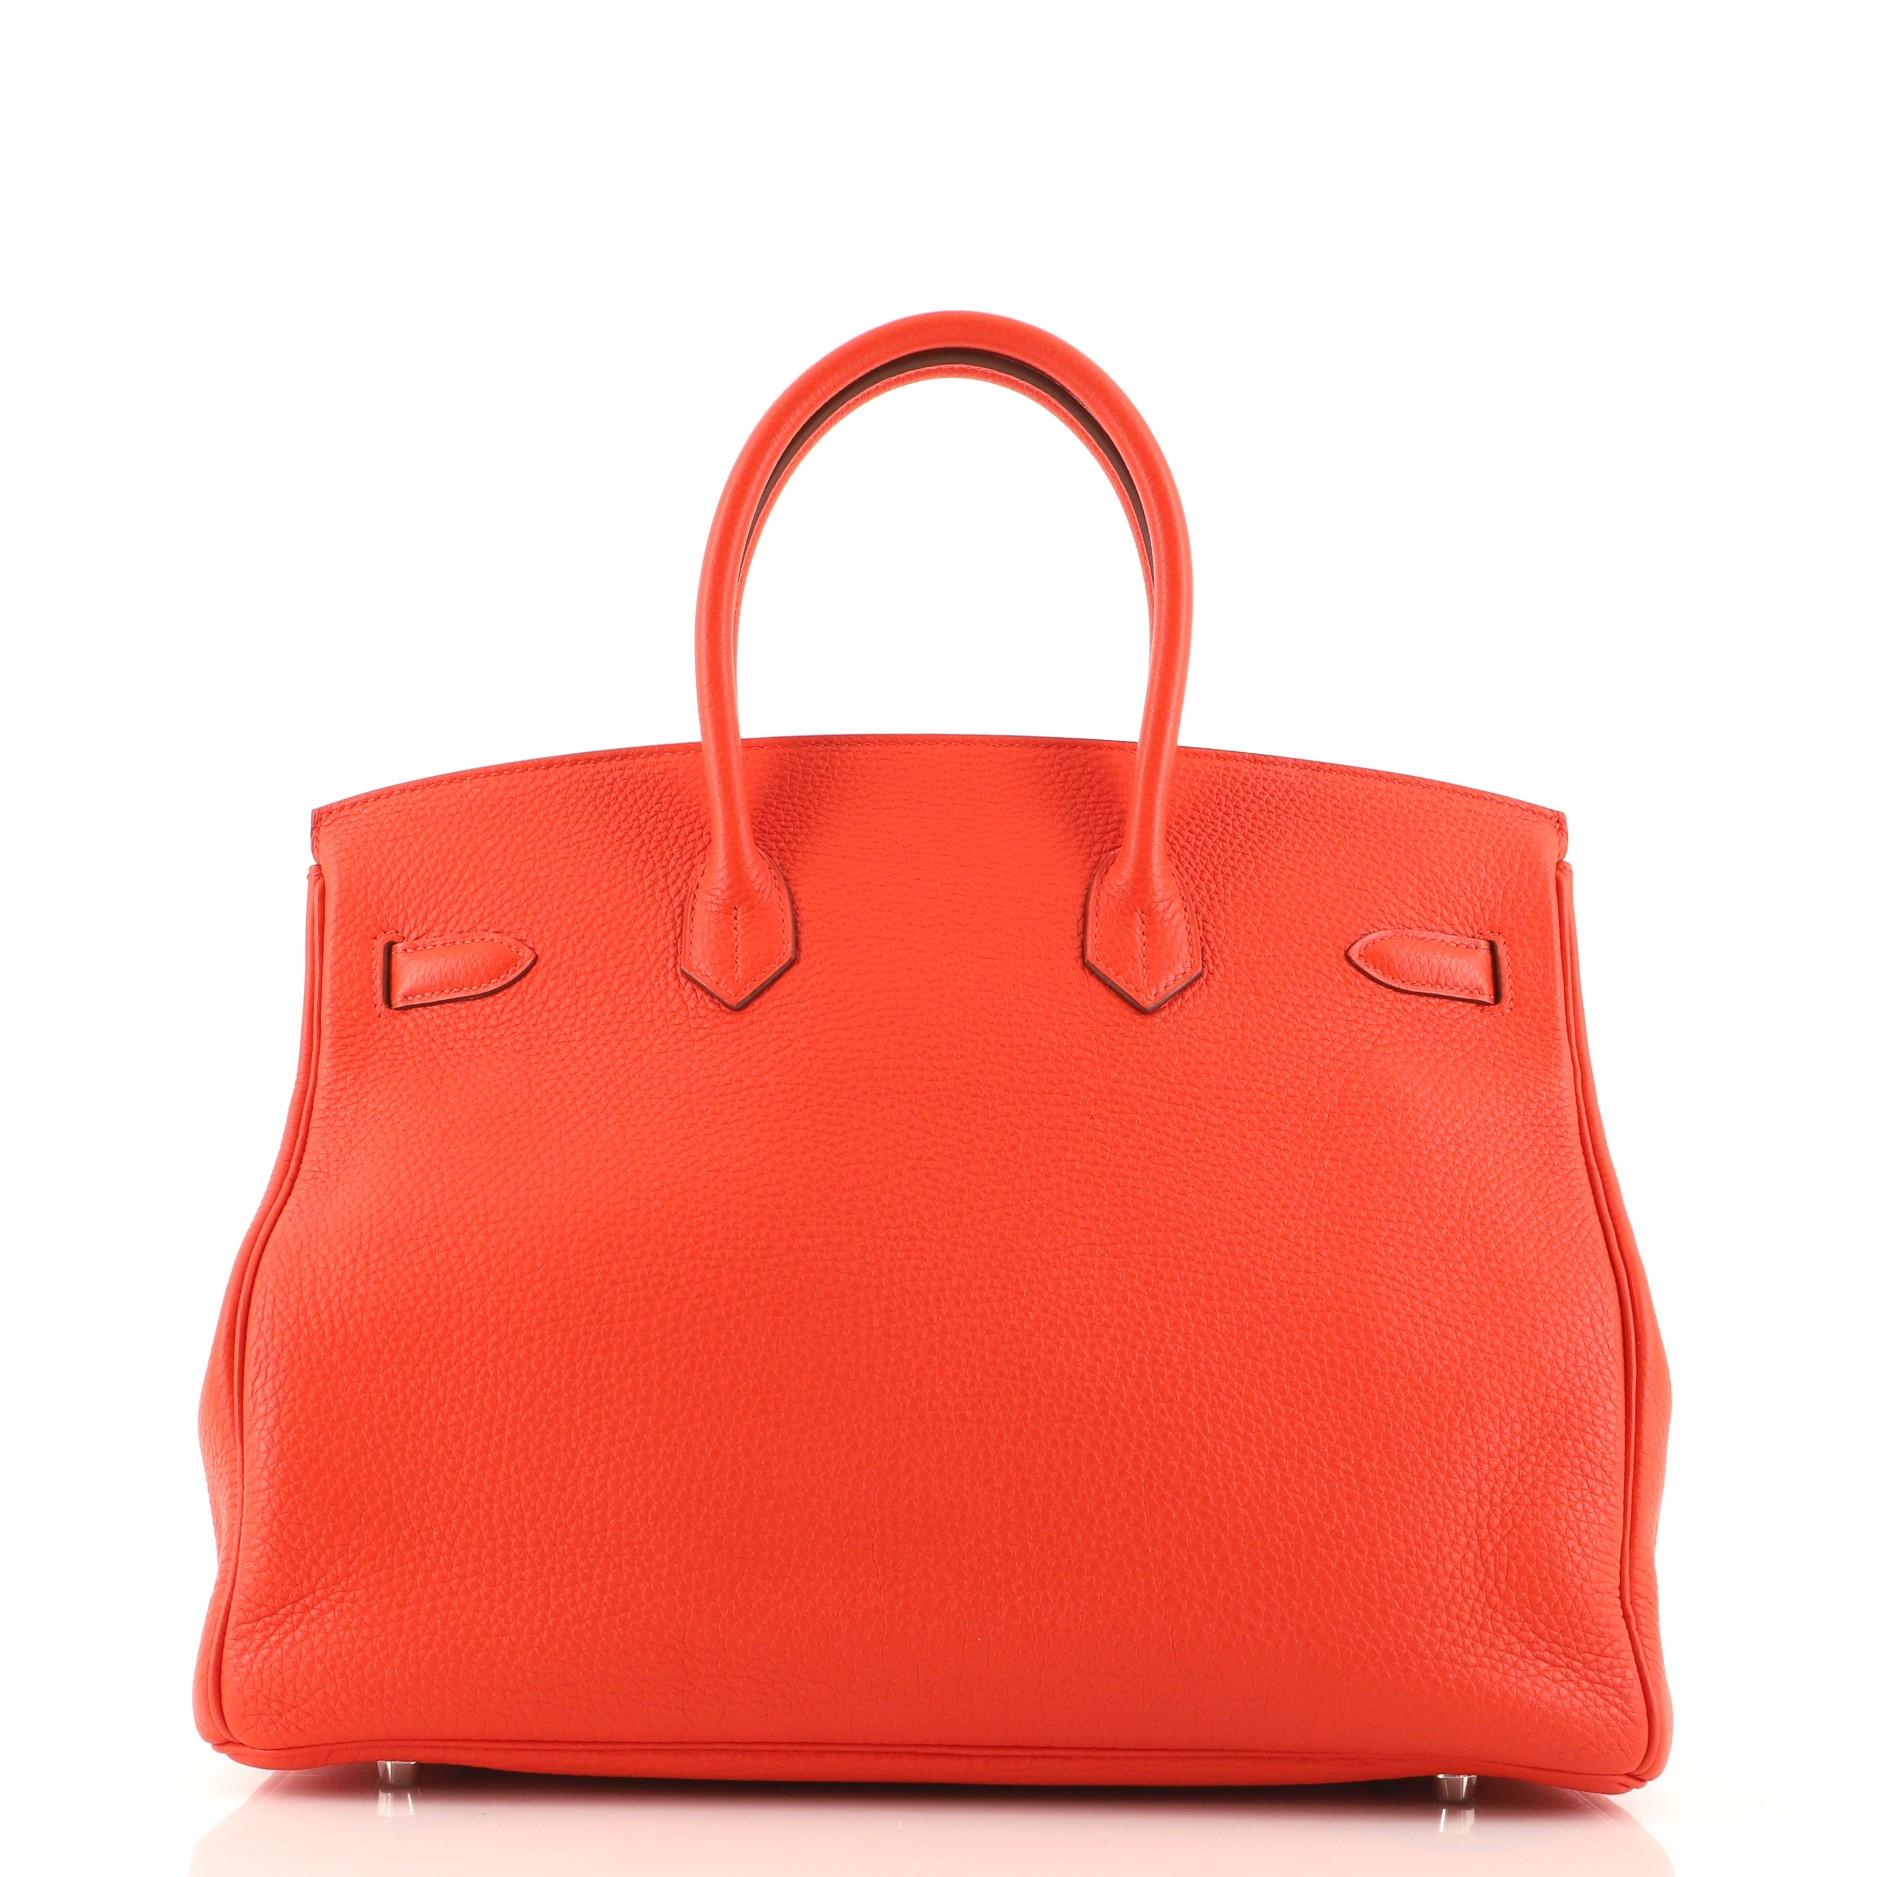 Red Hermes Birkin Handbag Capucine Togo with Palladium Hardware 35